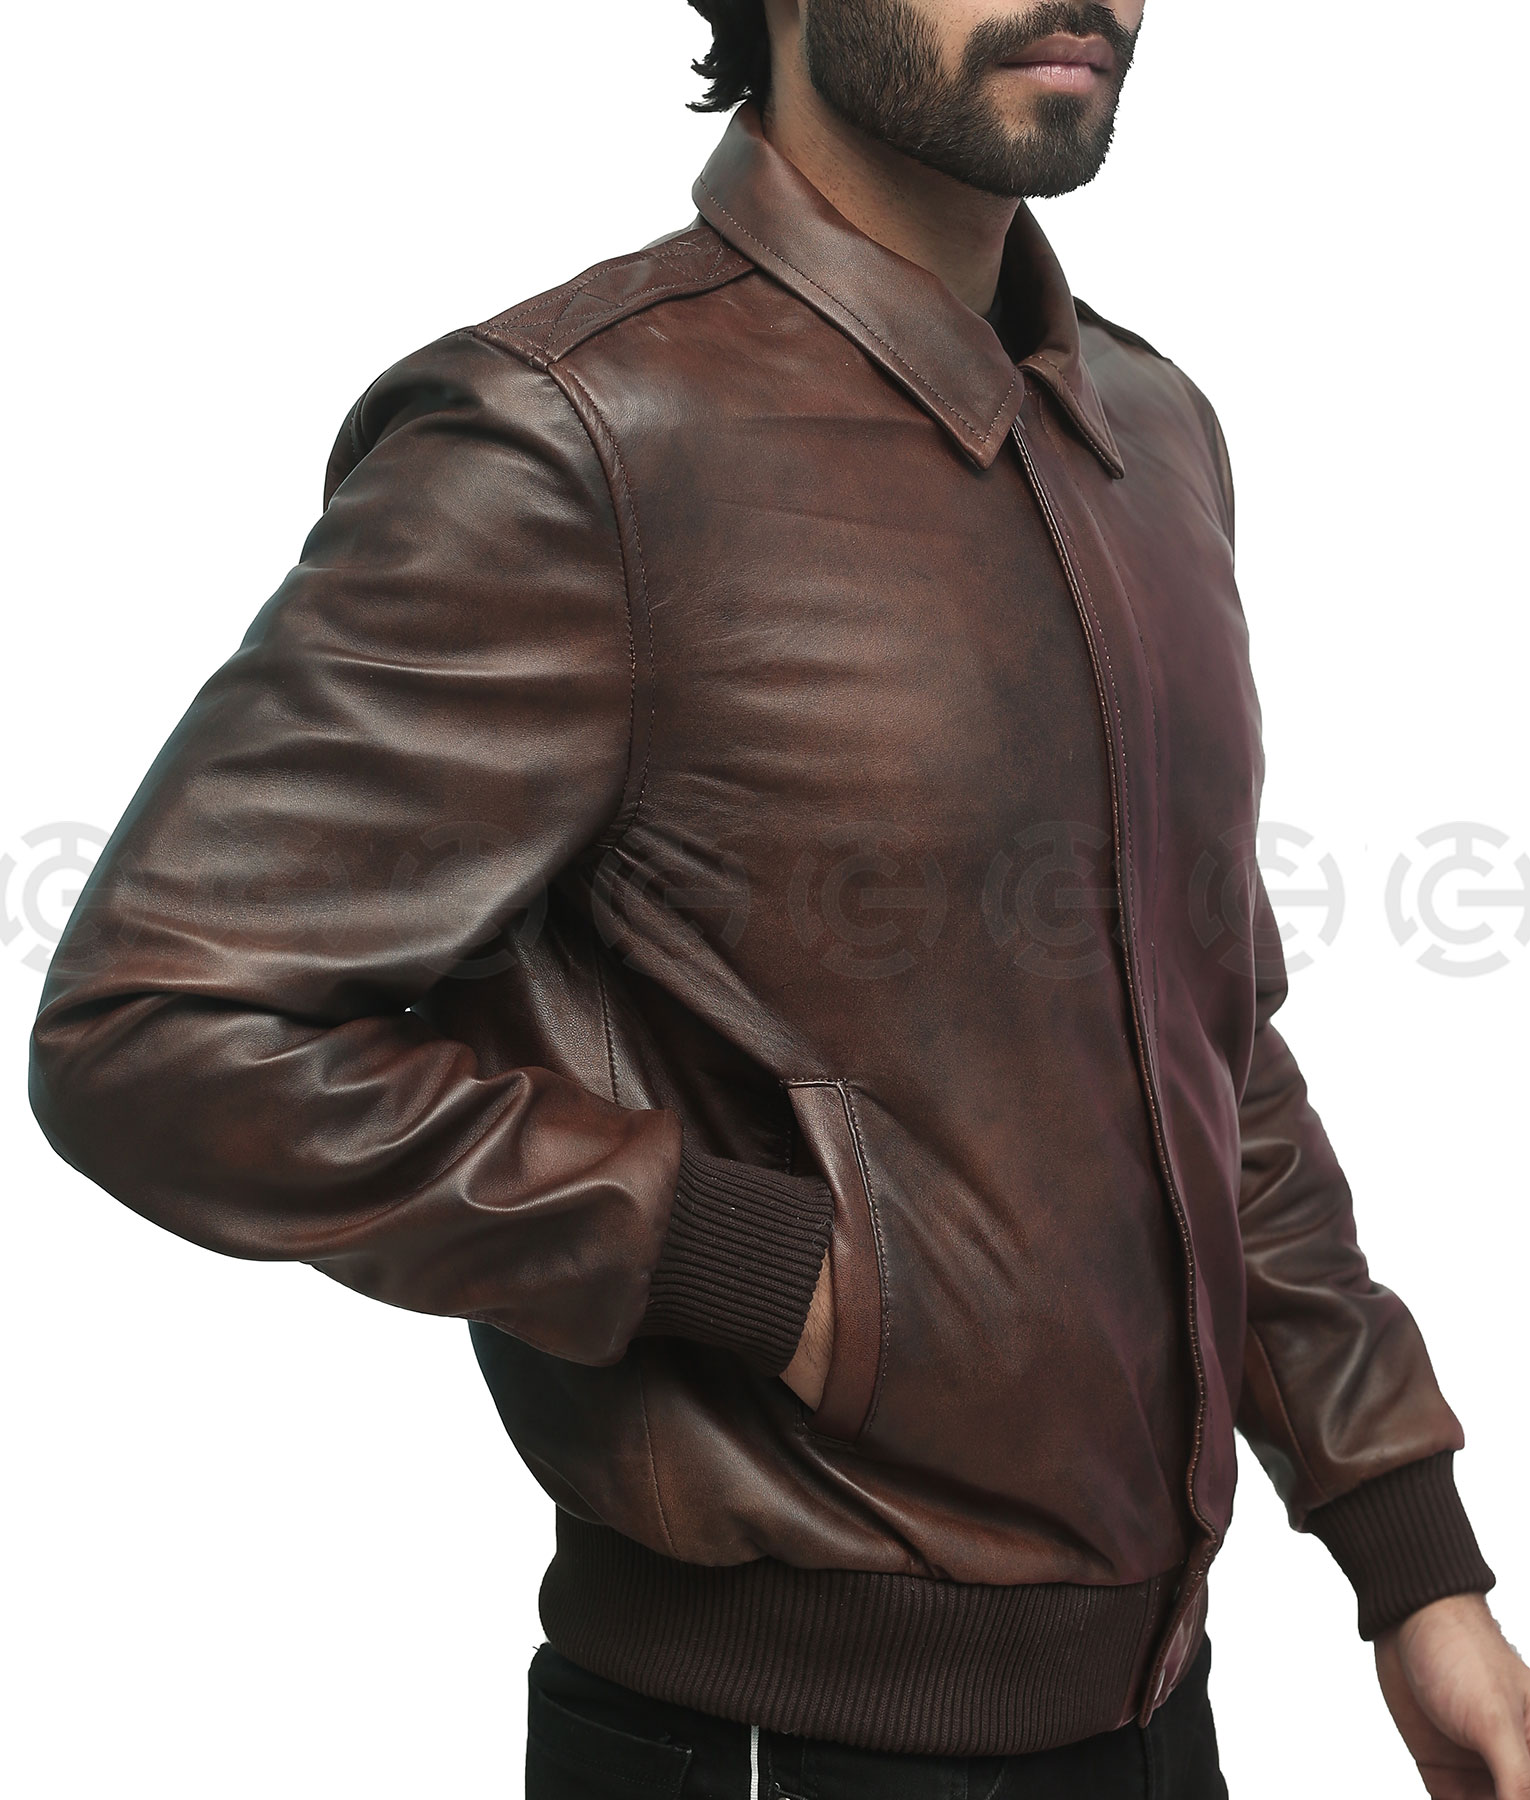 Murdock A Team Leather Jacket | Howling Mad Murdock Jacket